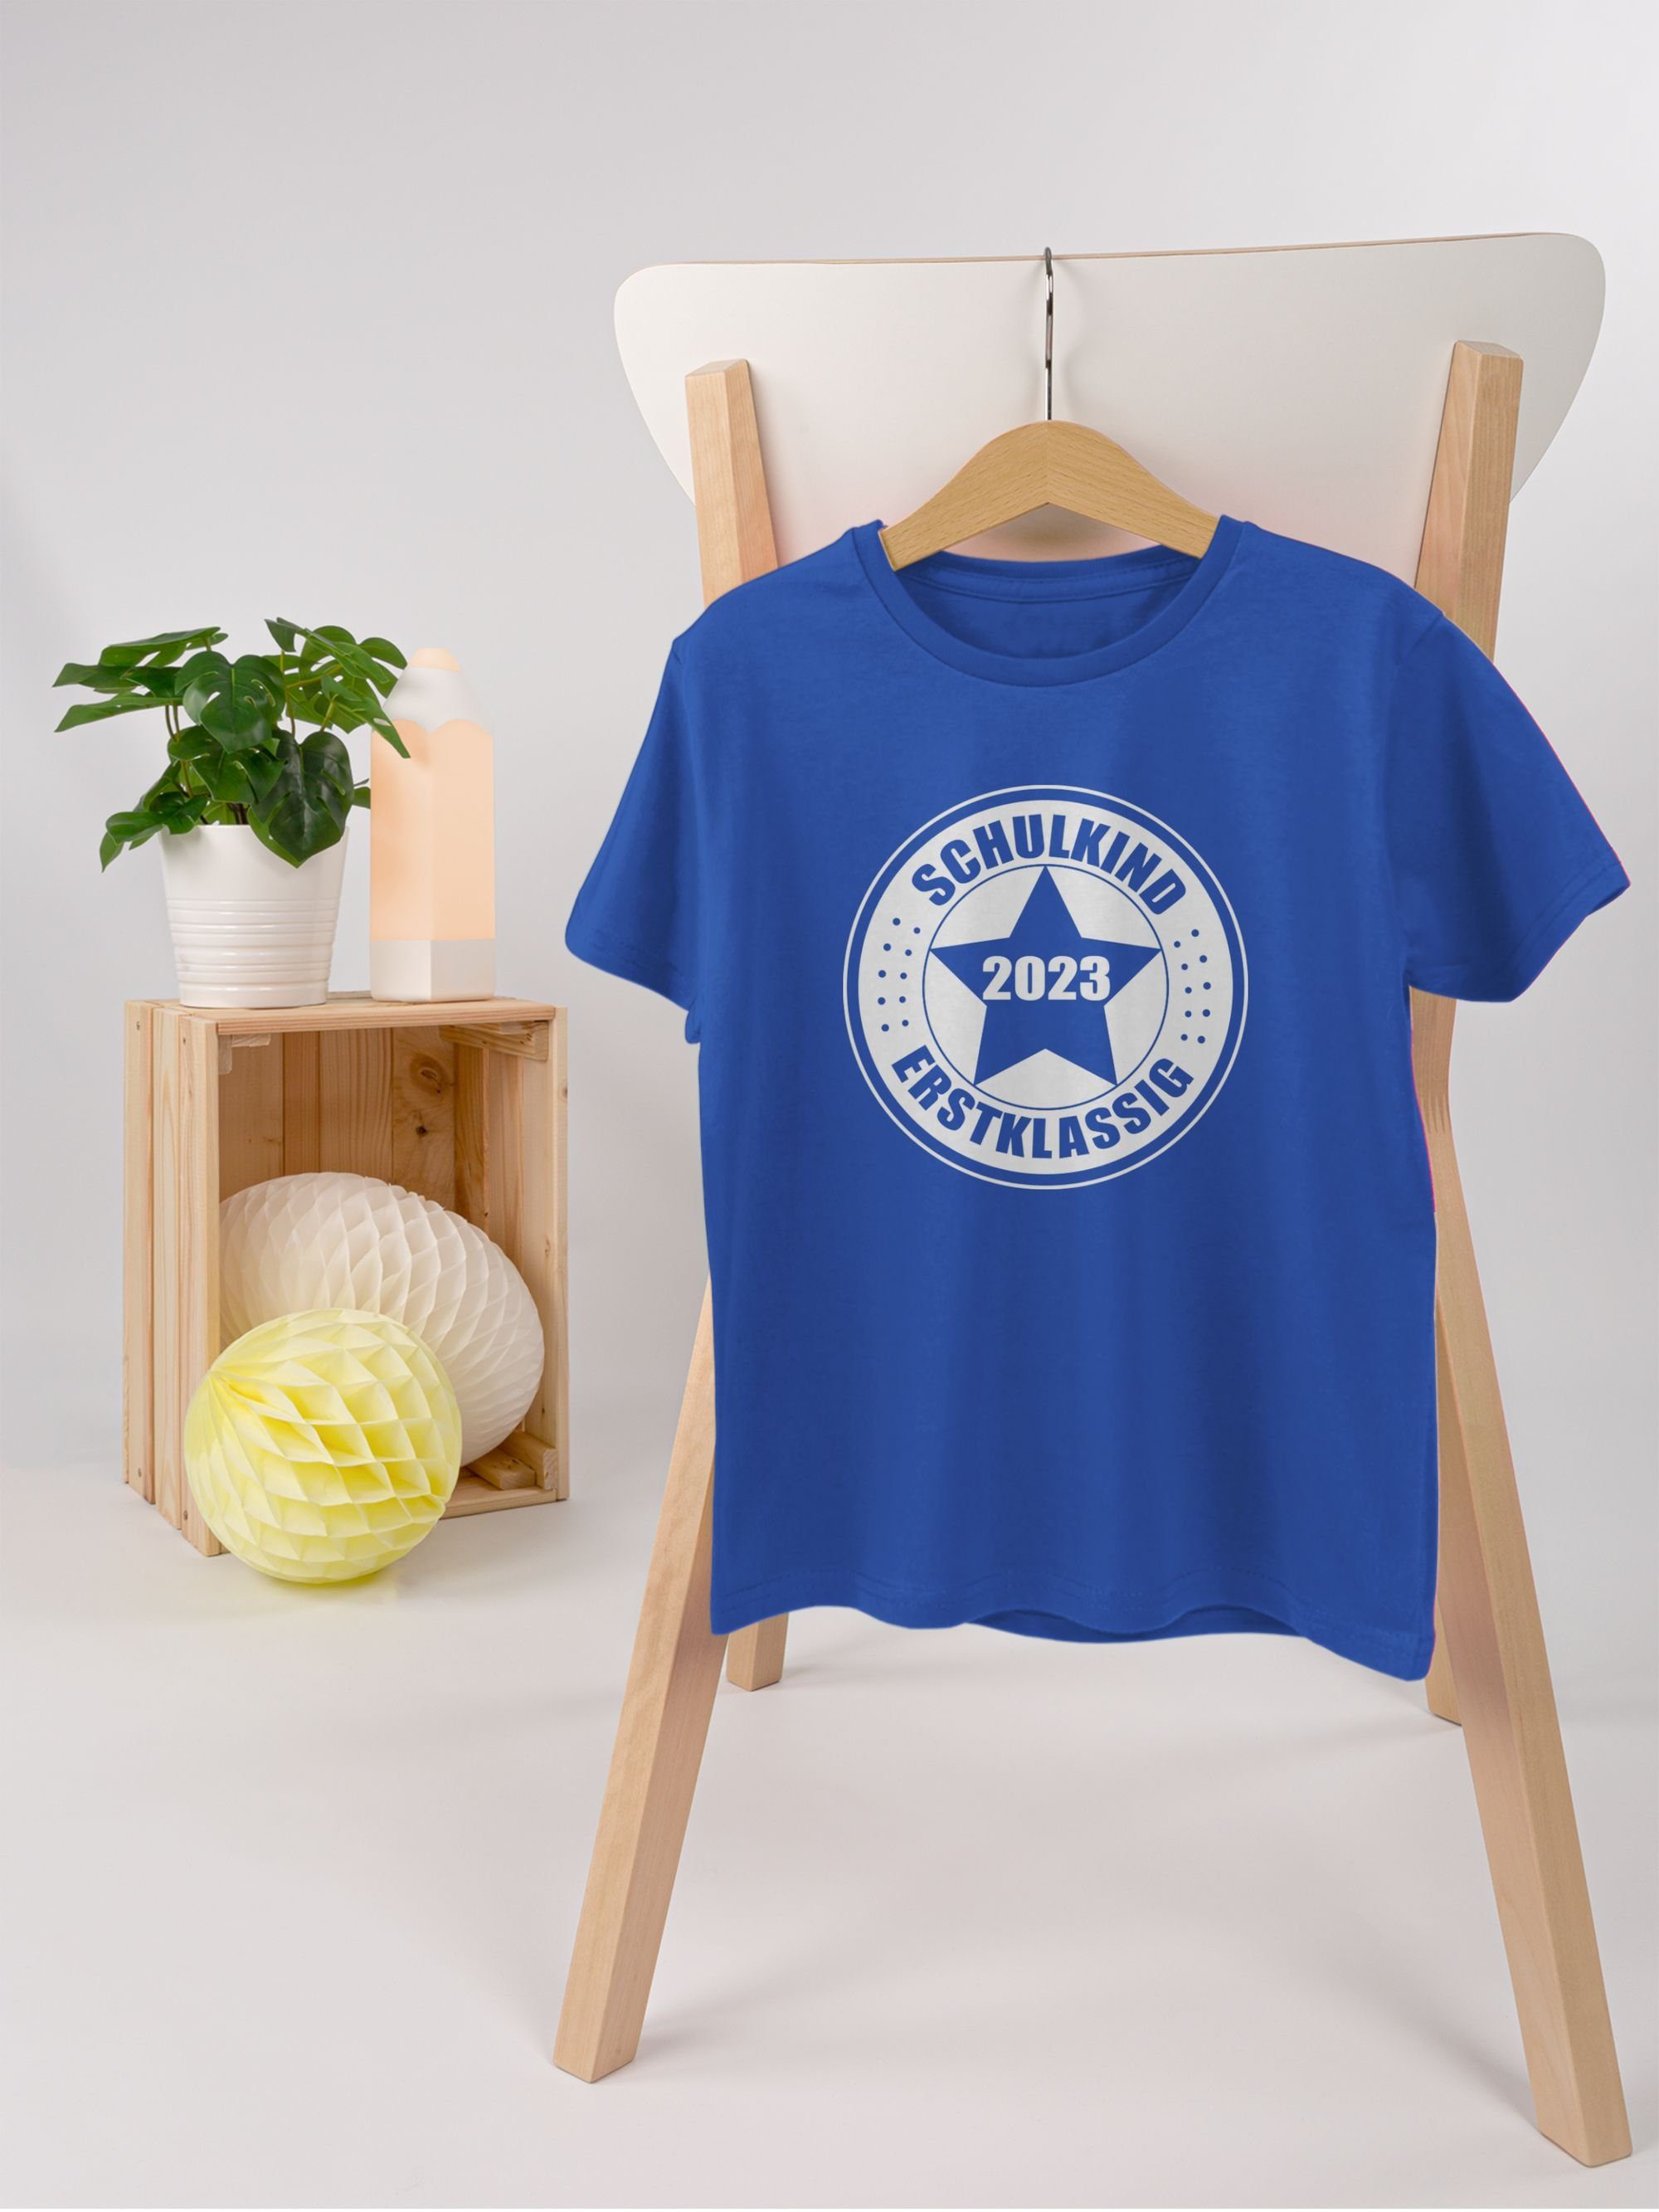 Junge Schulanfang - Geschenke Einschulung 03 Erstklassig Schulkind Royalblau Shirtracer T-Shirt 2023